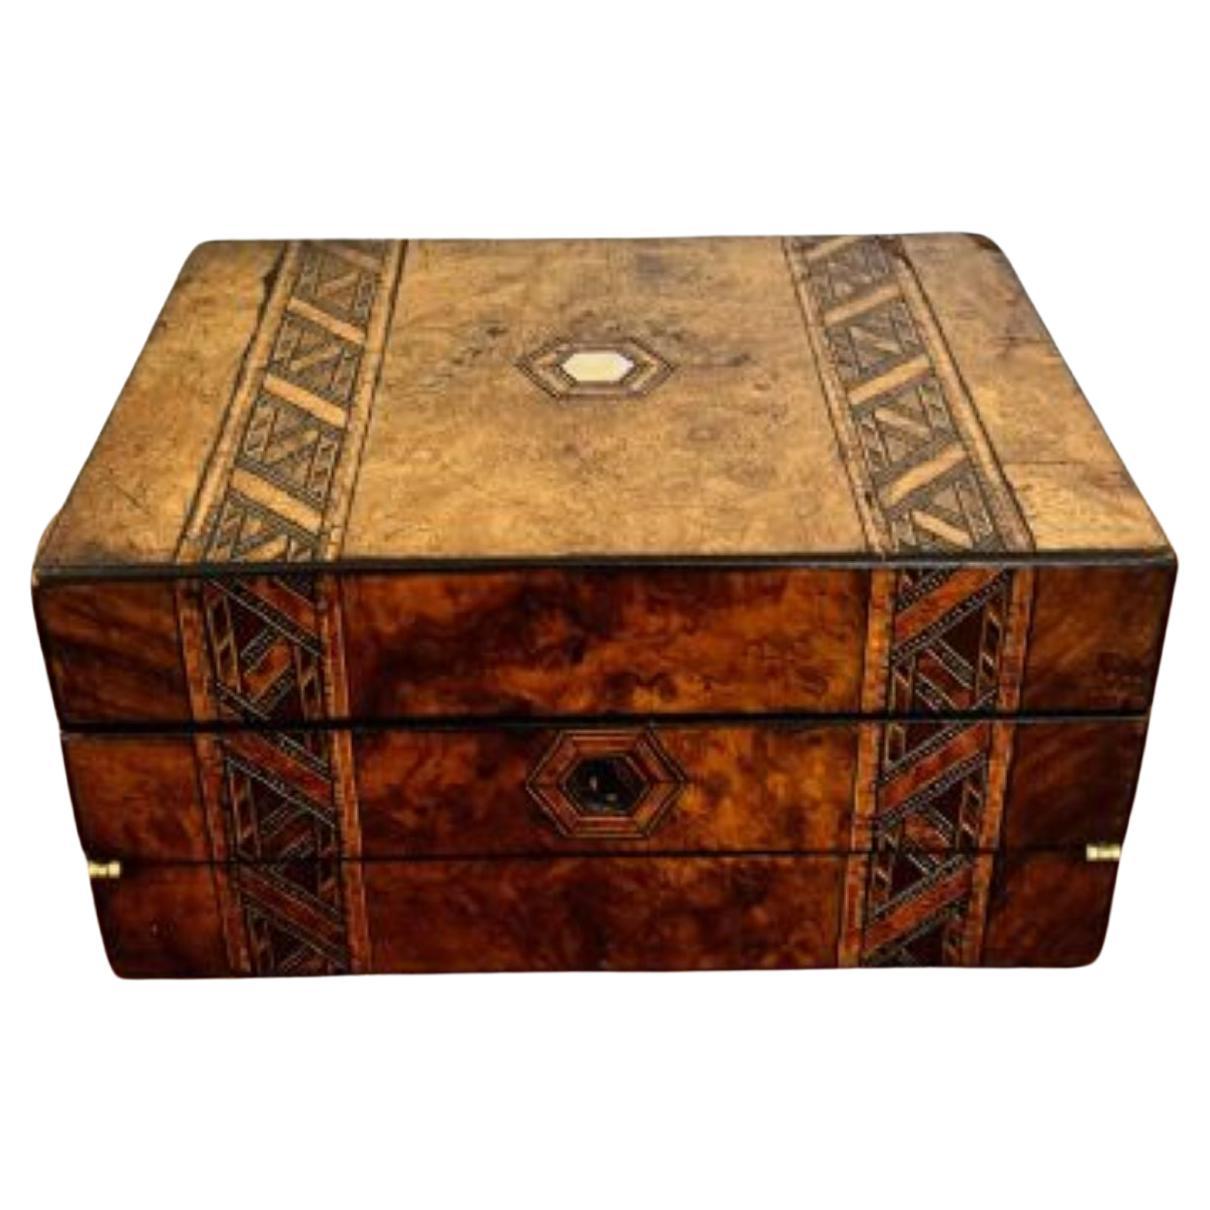 Lovely antique Victorian tunbridge ware inlaid writing box 